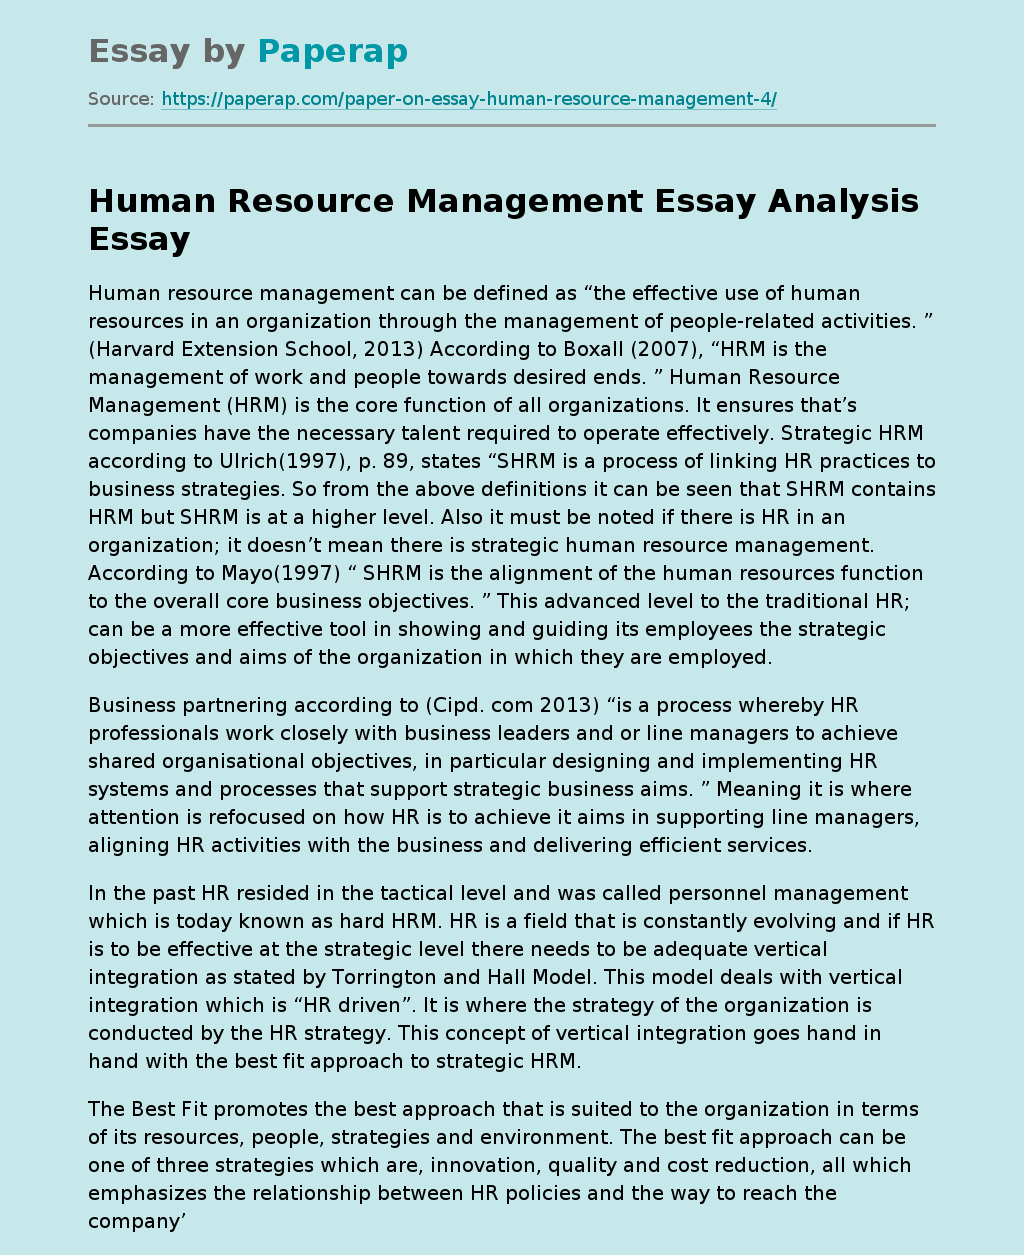 human resources essay ideas